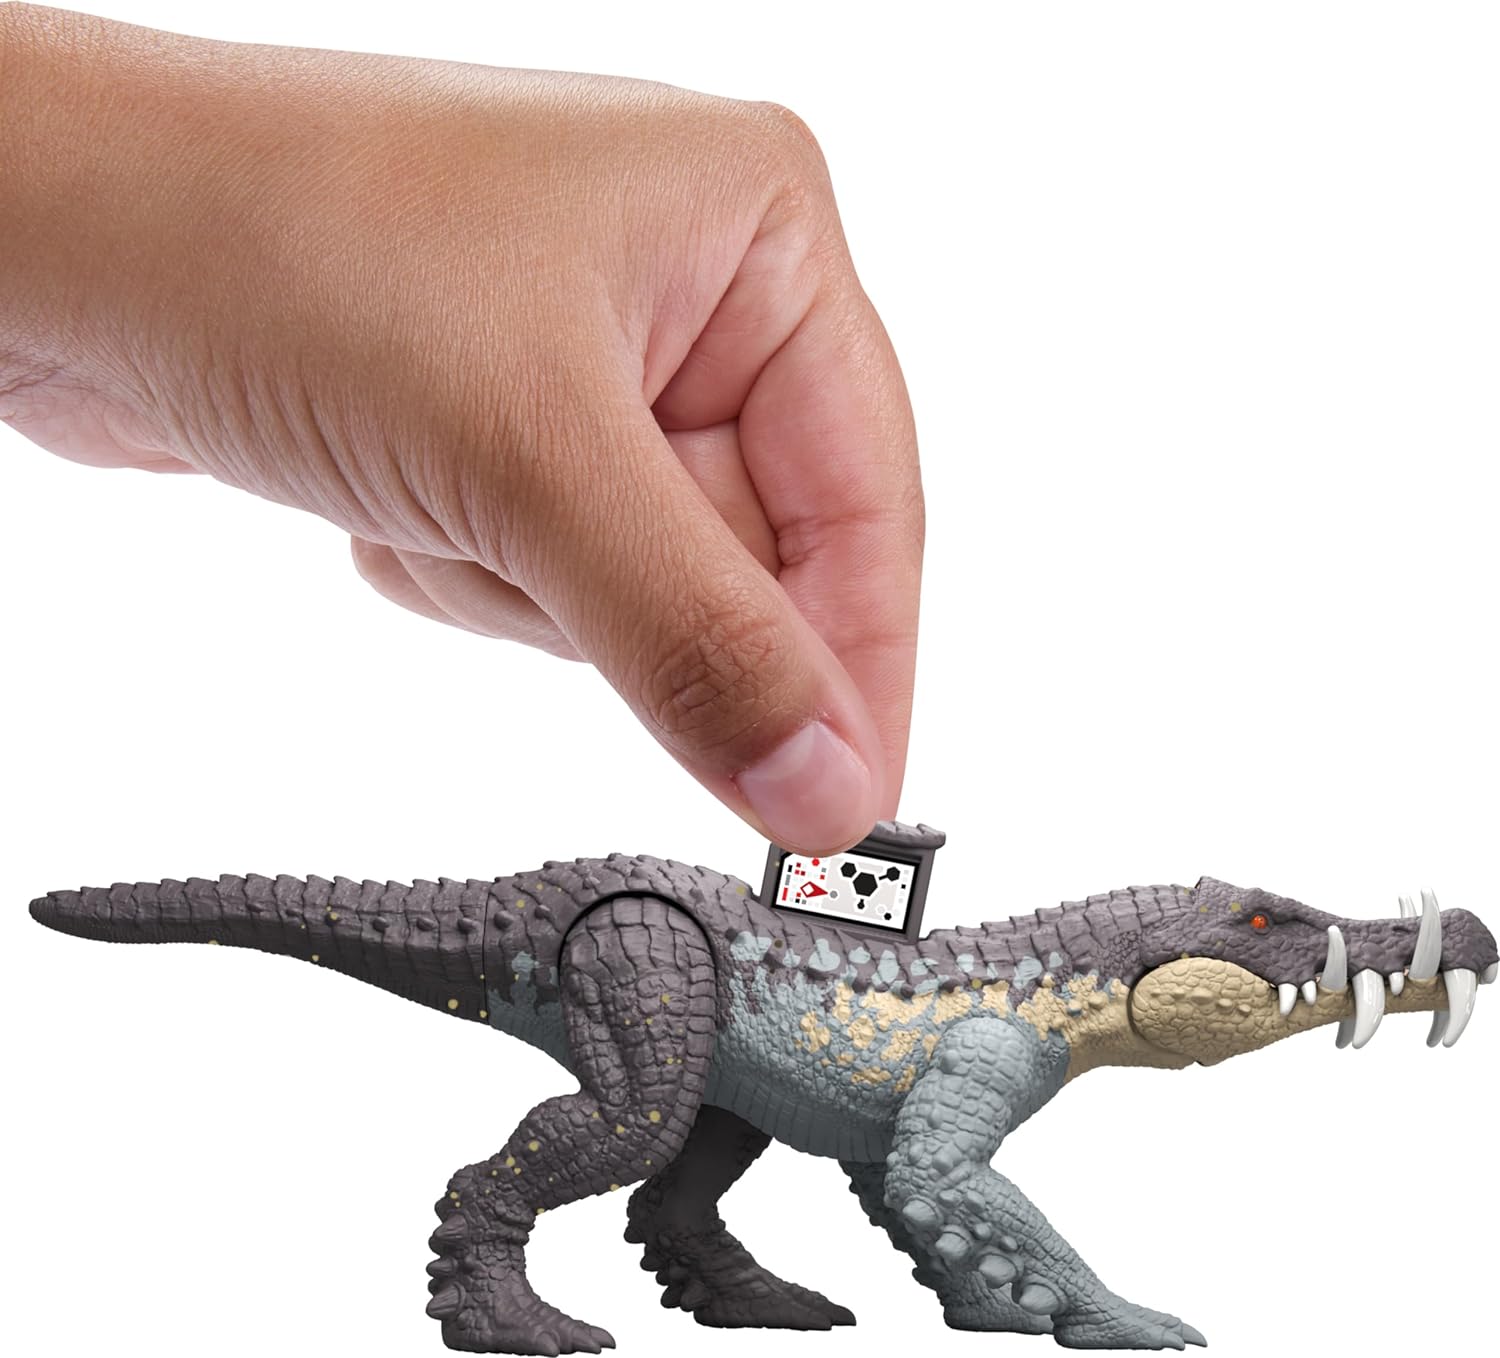 Mattel Jurassic World - Epic Evolution , Strike Attack Kaprosuchus HTK61 (HLN63)